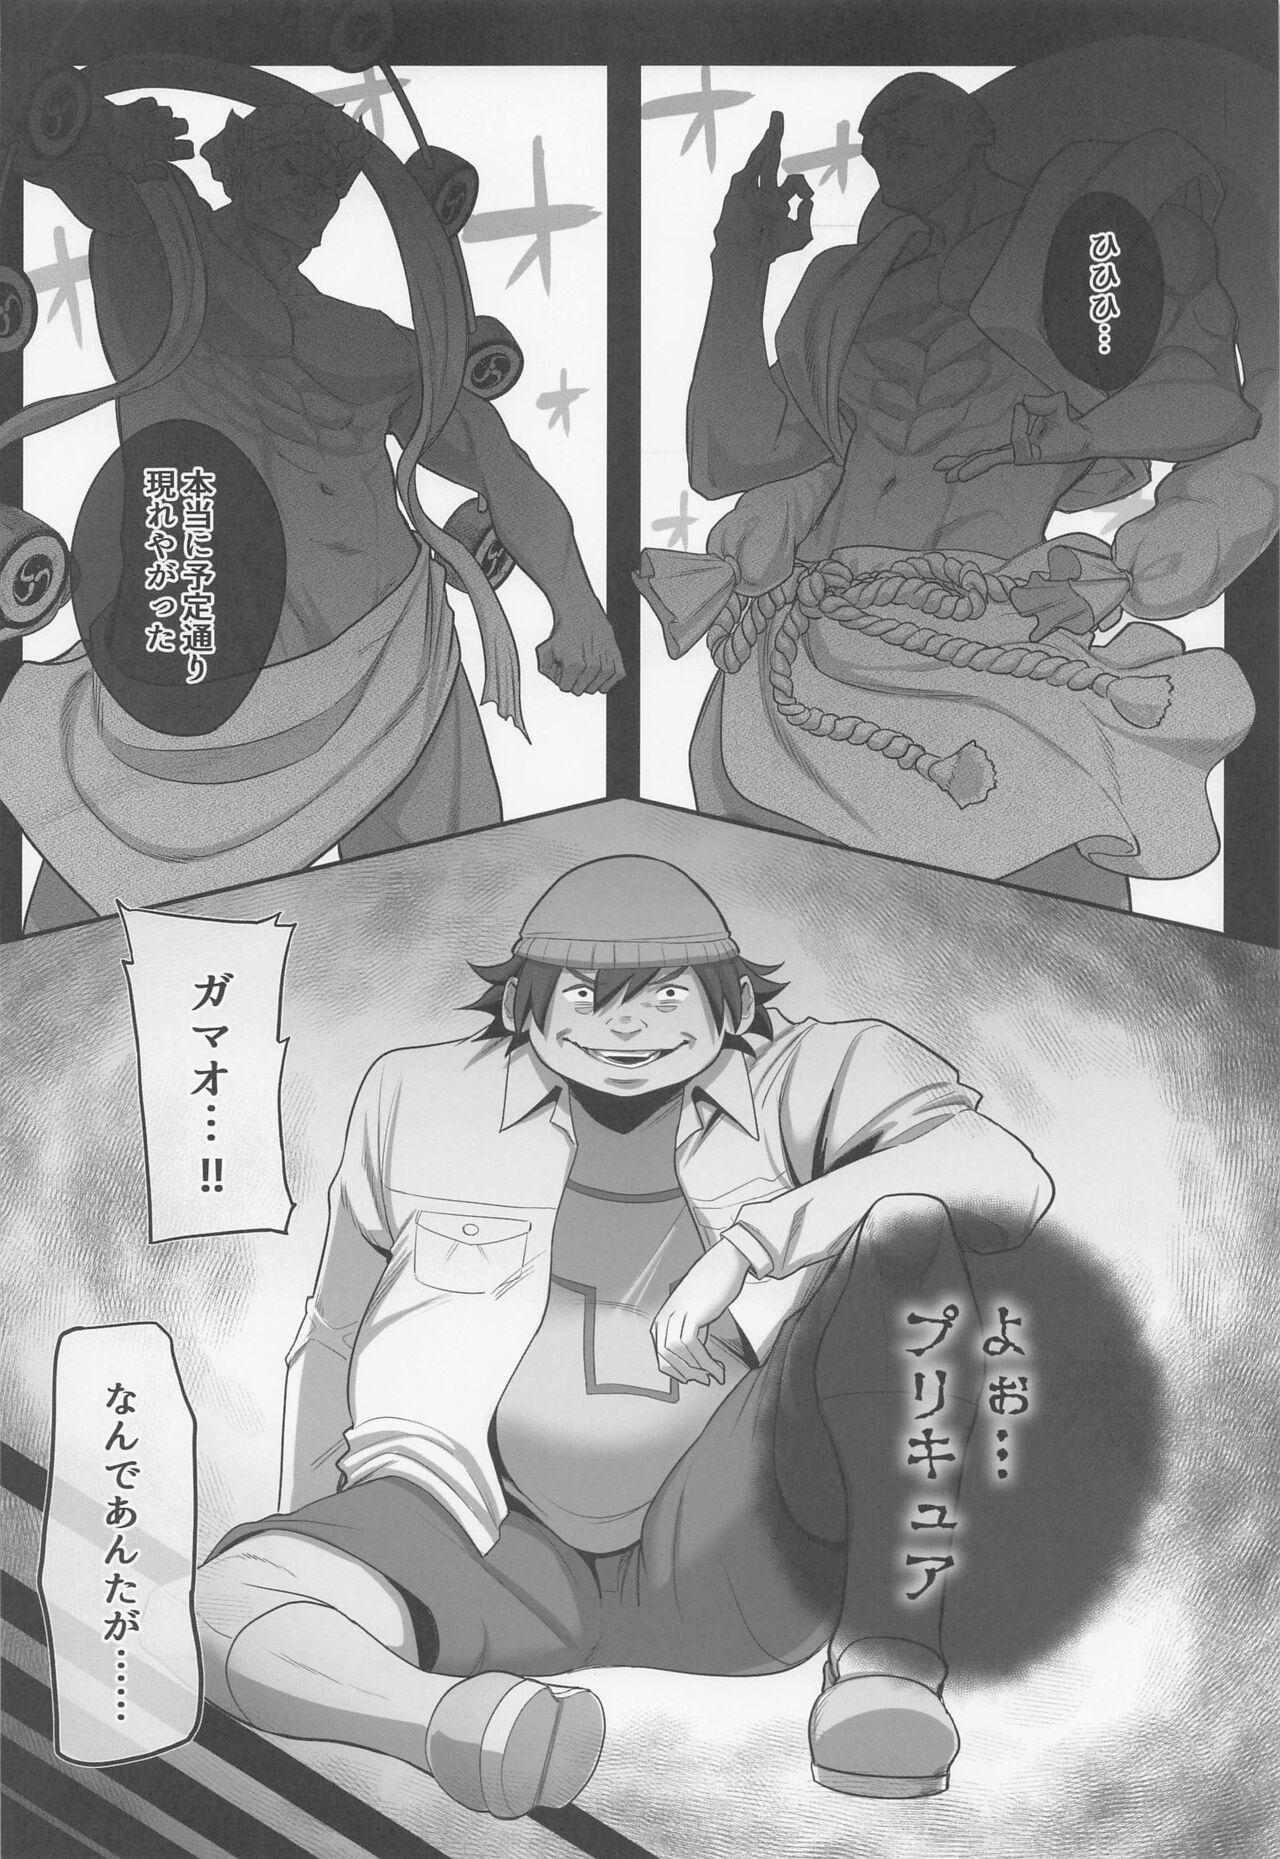 Femdom Precure no Rakujitsu 2 - Yes precure 5 Wank - Page 3